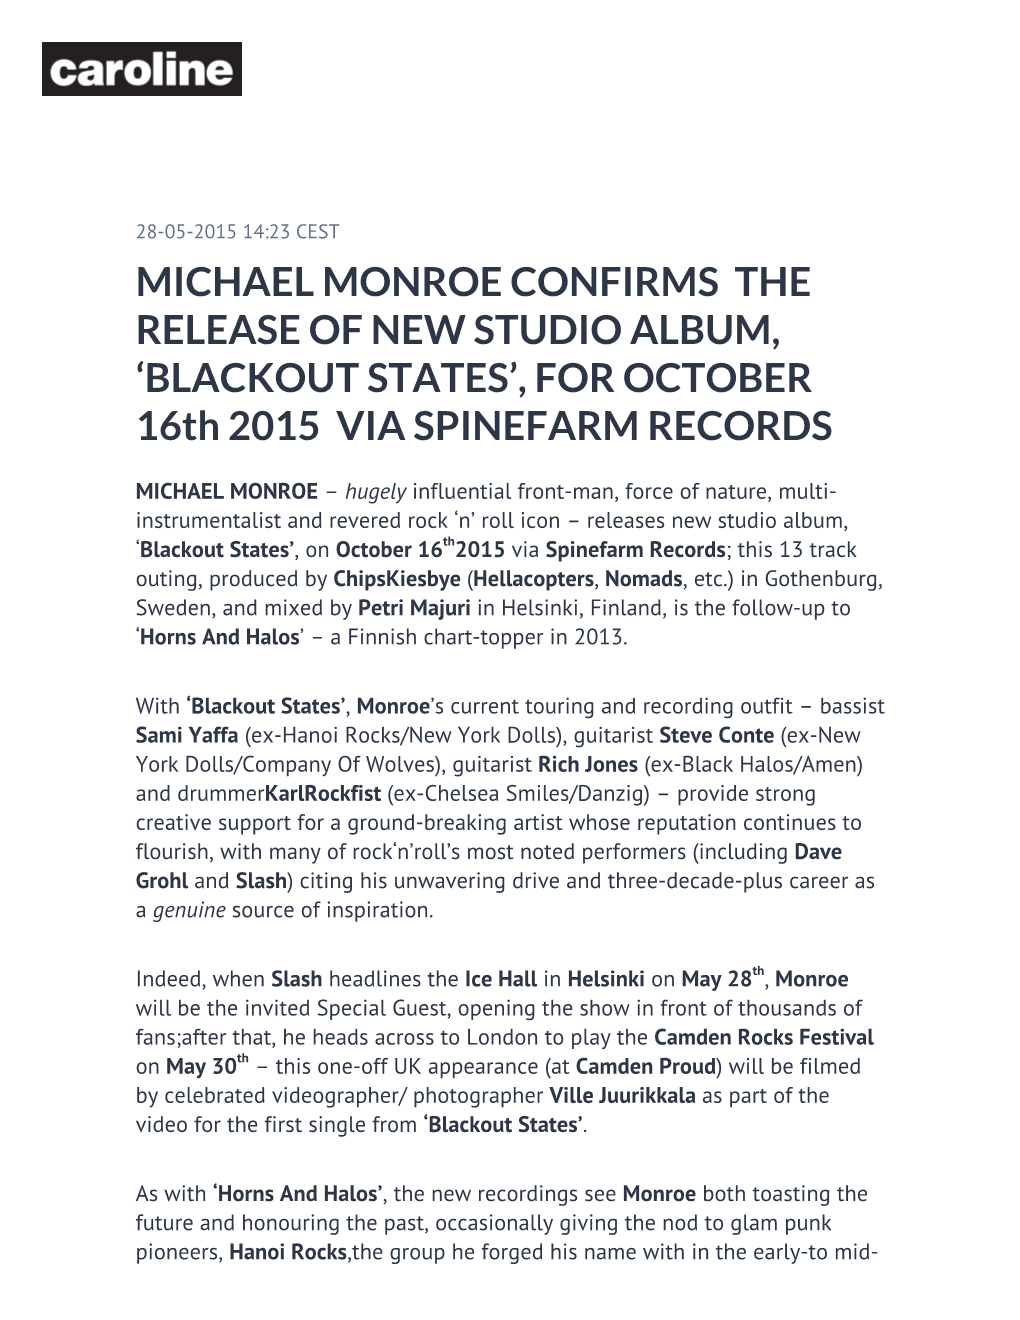 MICHAEL MONROE CONFIRMS the RELEASE of NEW STUDIO ALBUM, ‘BLACKOUT STATES’, for OCTOBER 16Th 2015 VIA SPINEFARM RECORDS